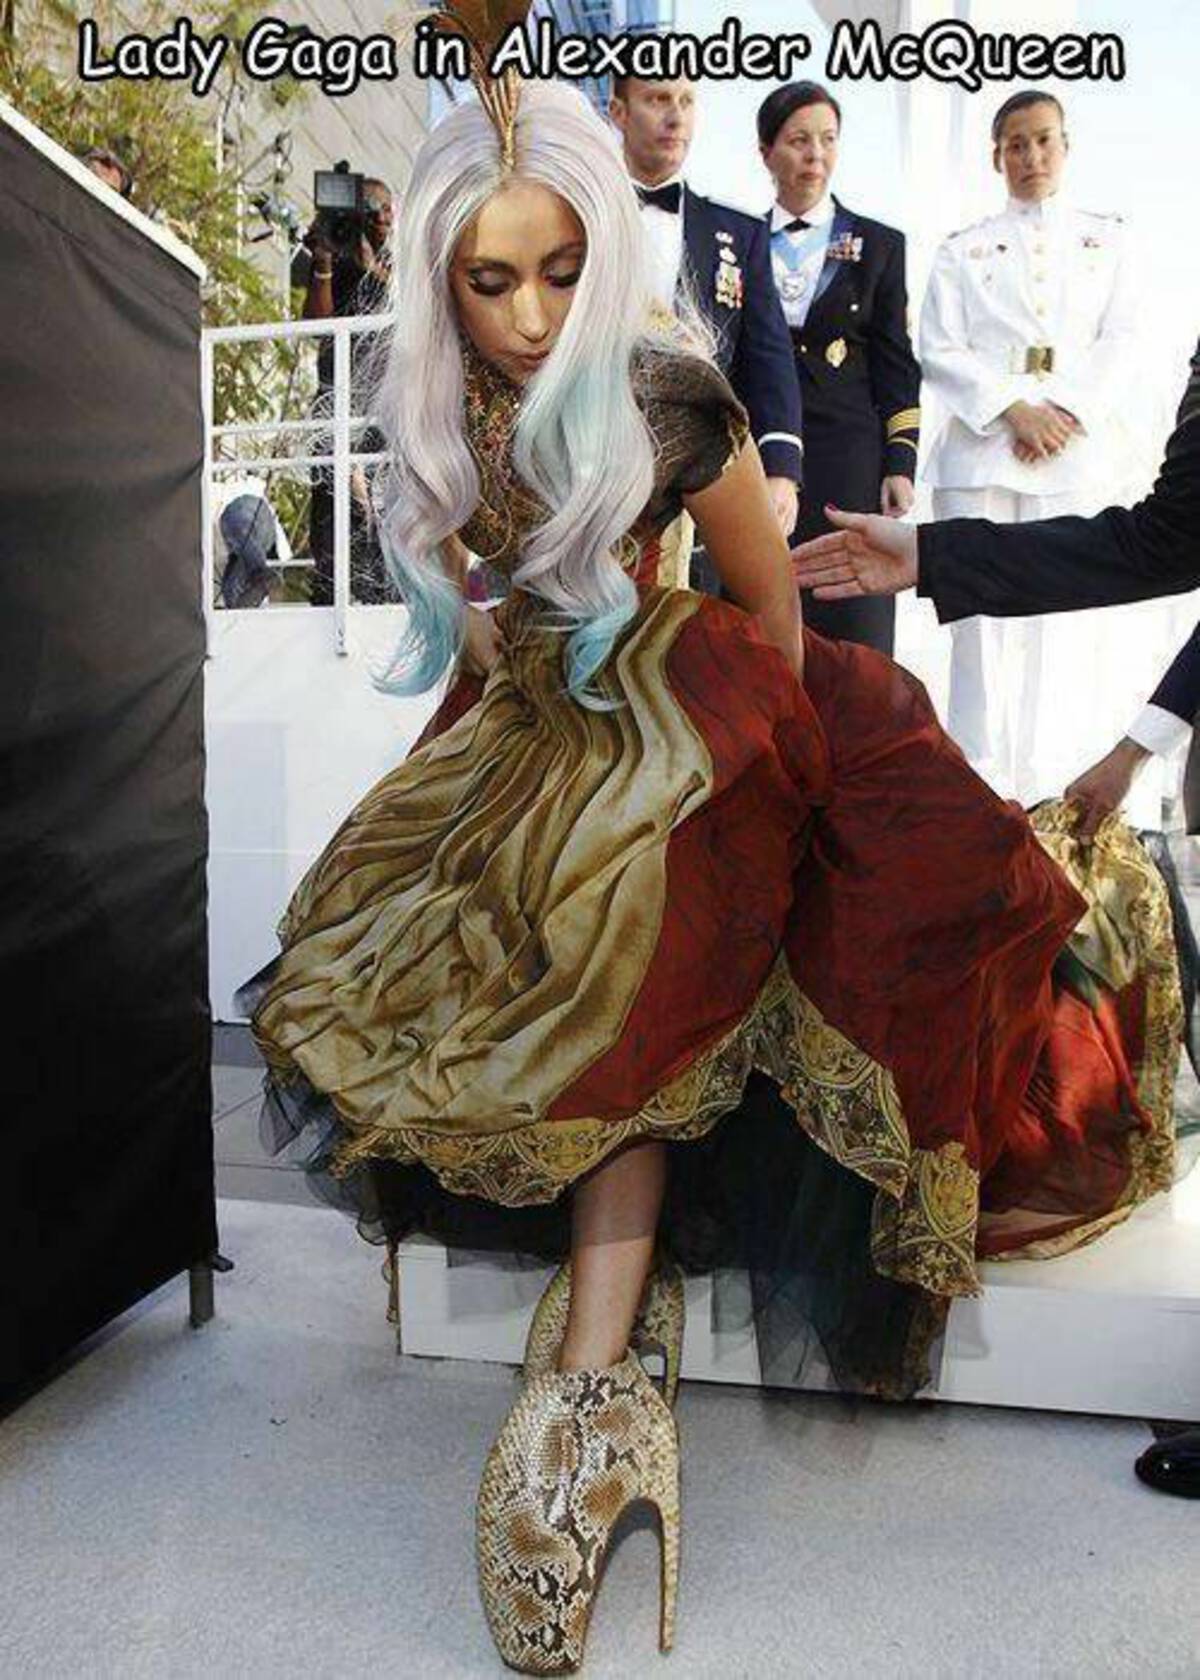 lady gaga alexander mcqueen shoes - Lady Gaga in Alexander McQueen